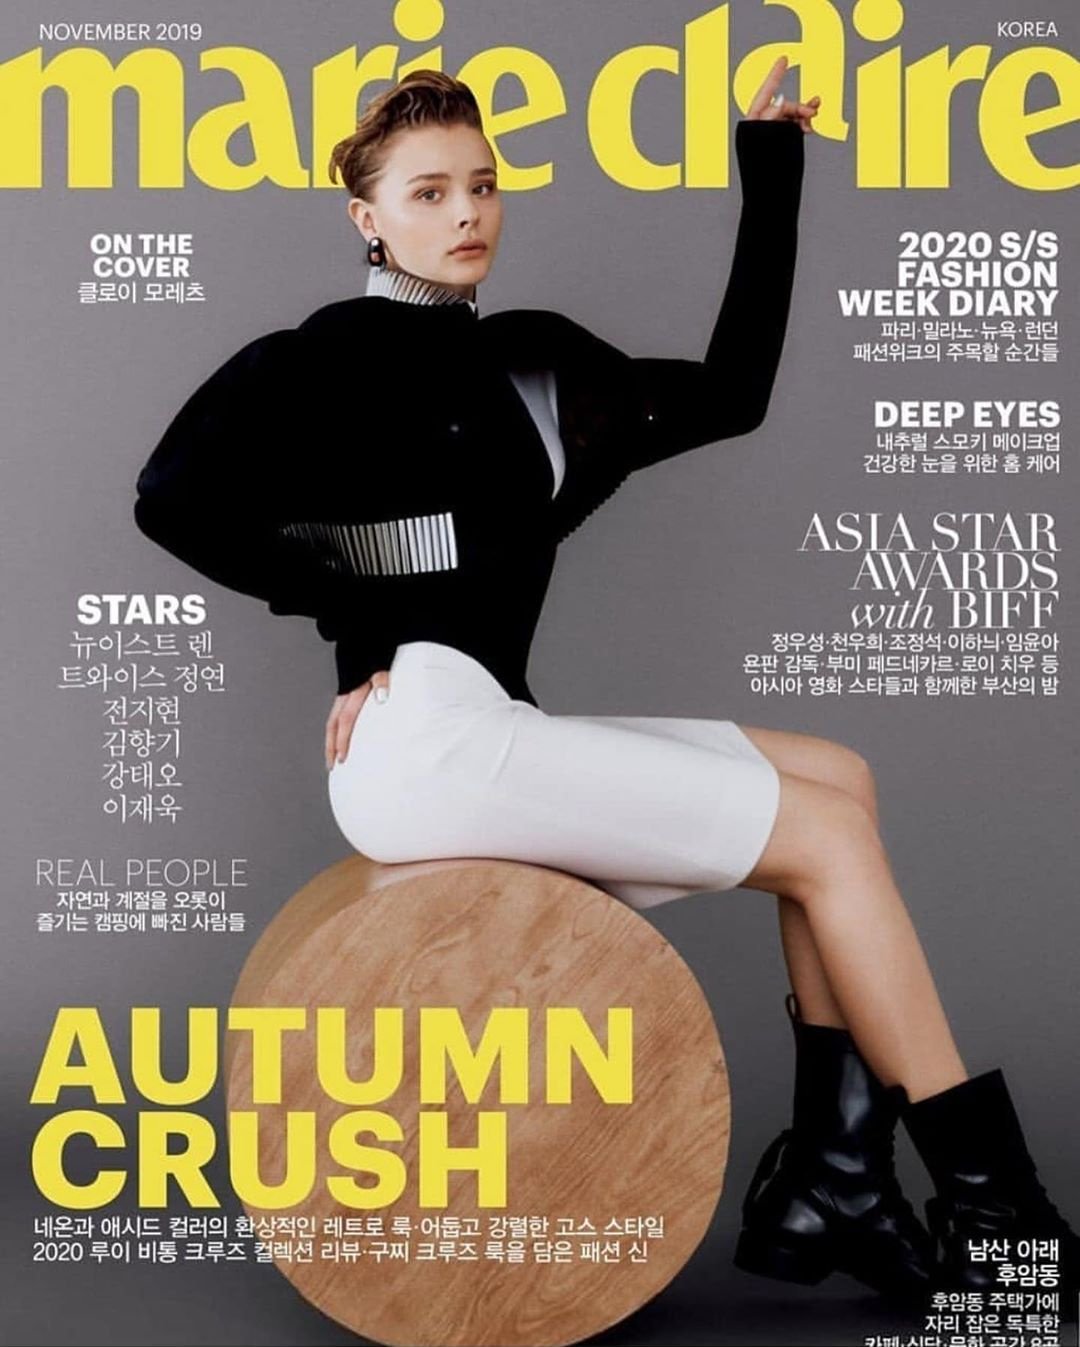 Chloë Grace Moretz in Seoul, Marie Claire magazine August issue 2023 :  r/ChloeGraceMoretzLove